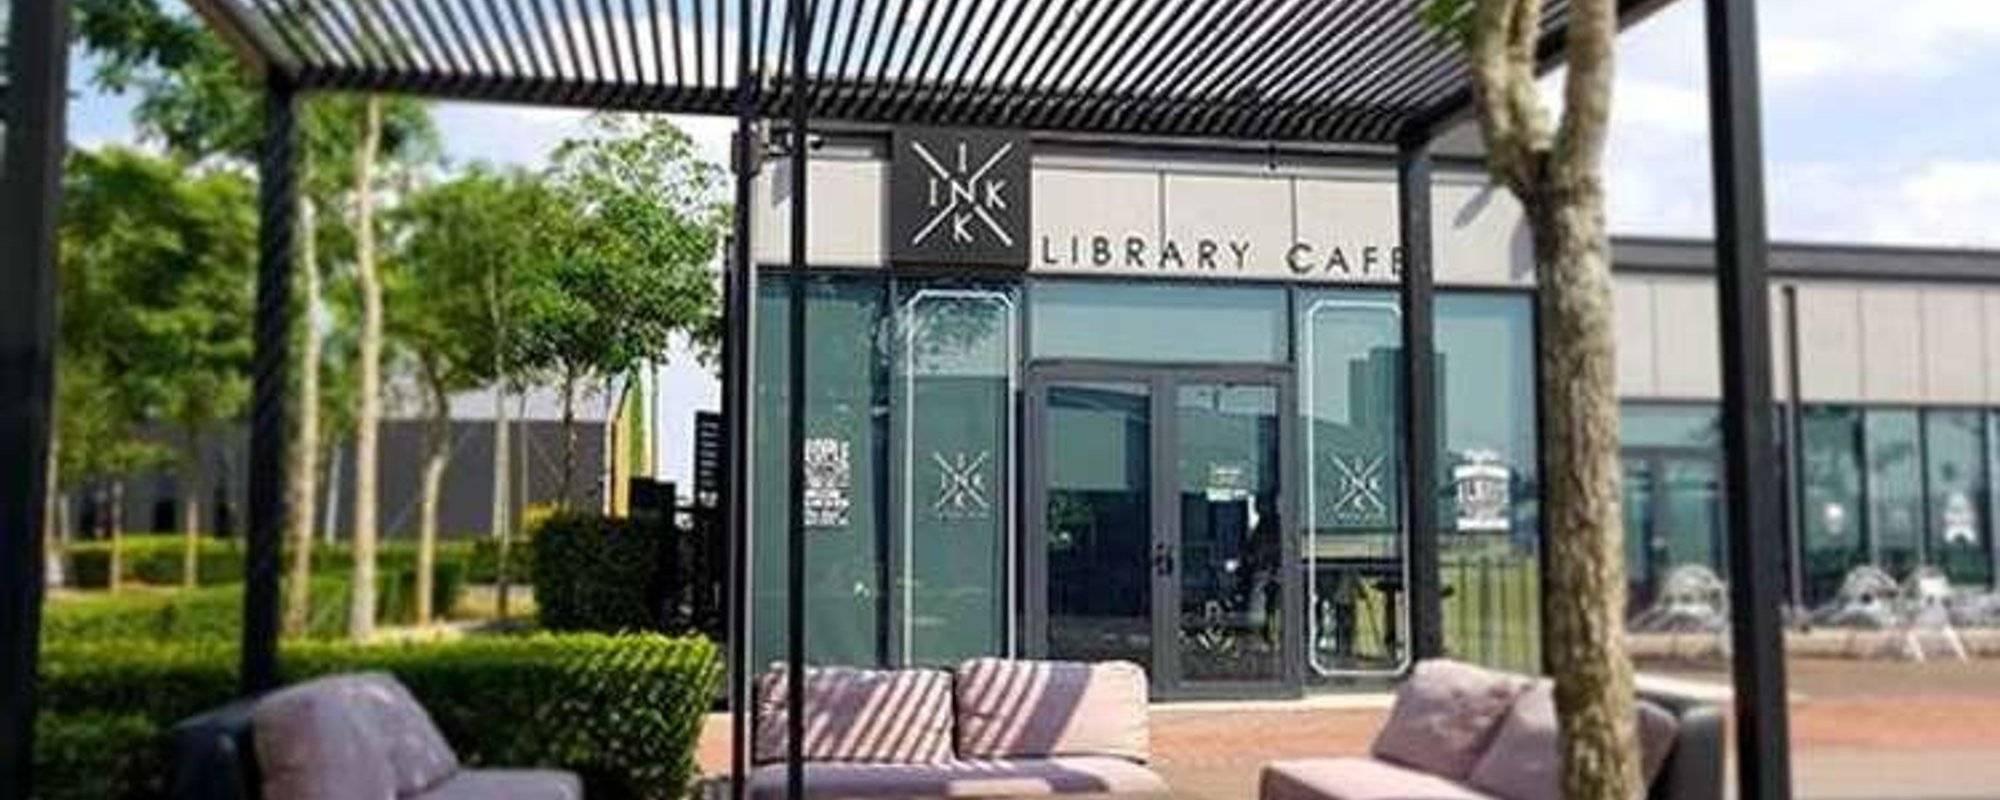 The Ink Library Cafe @ Grandeur Labs.